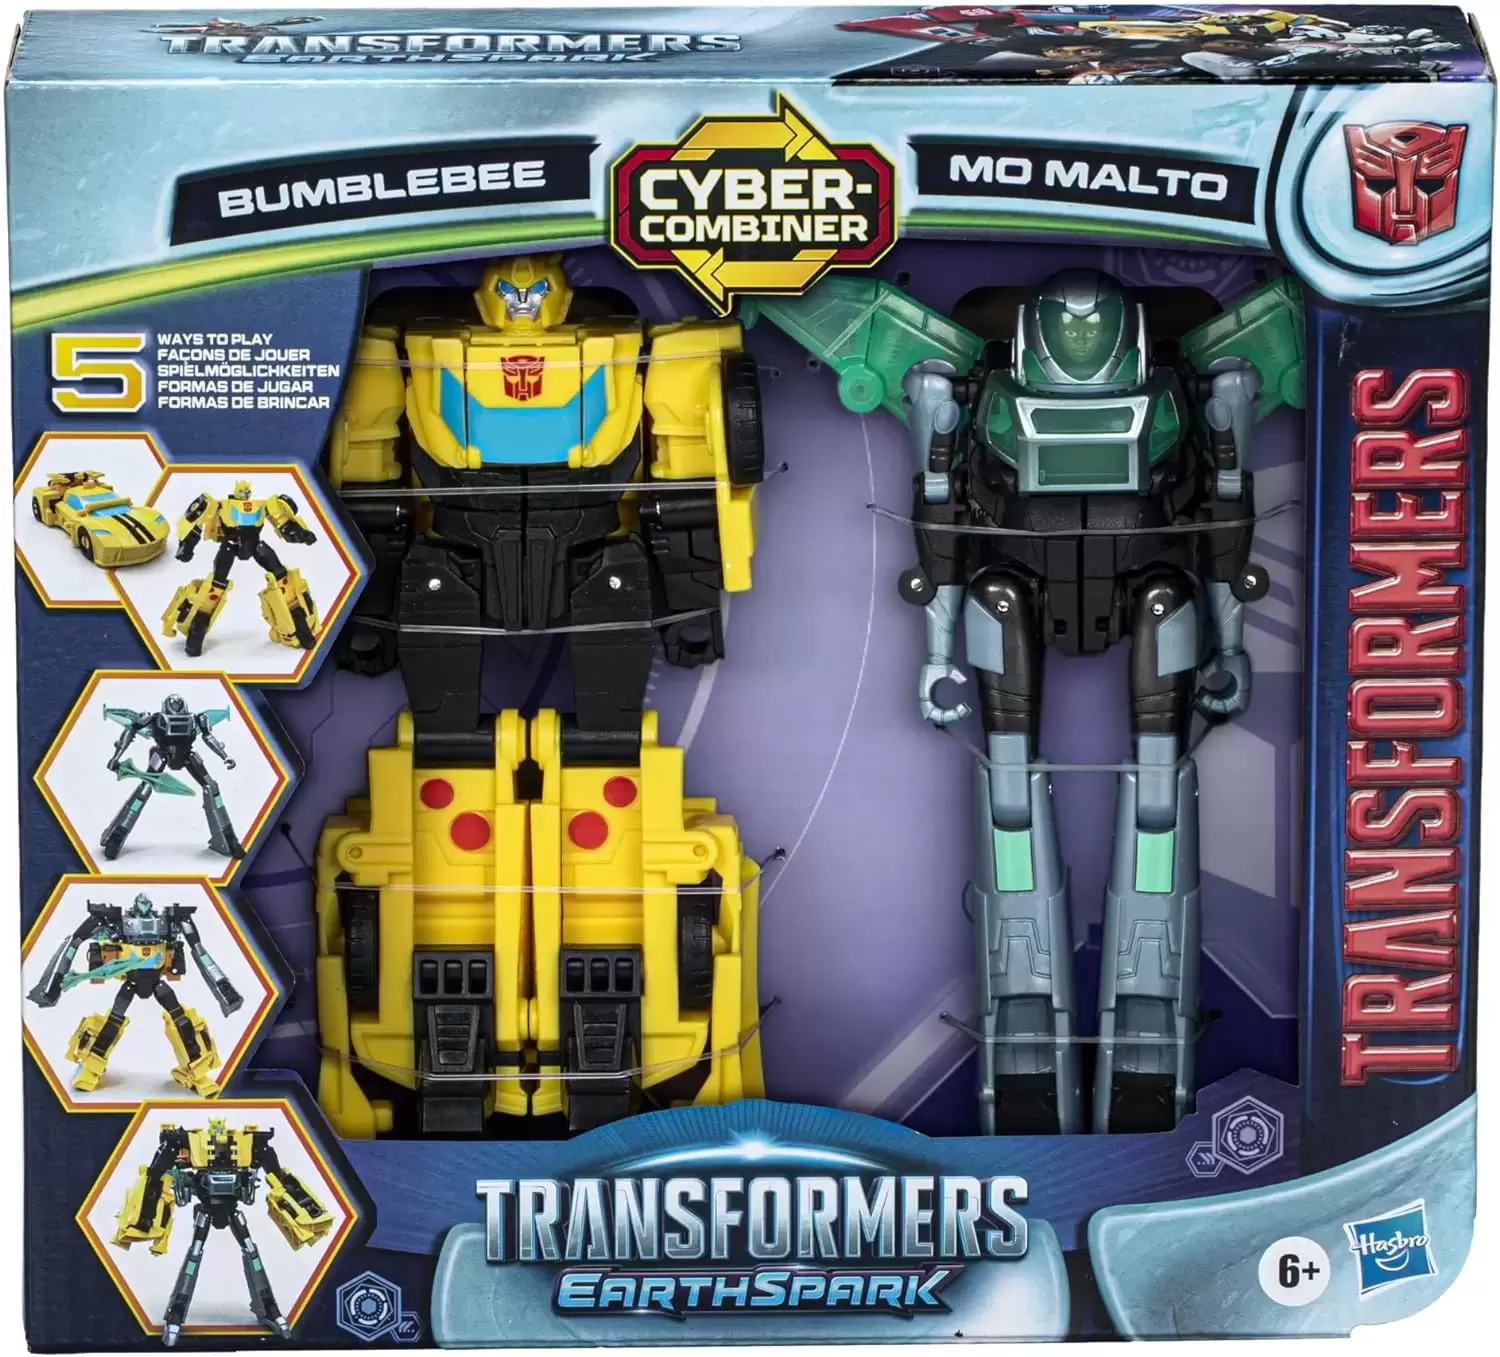 Transformers Earthspark - Bumblebee & Mo Malto - Cyber-Combiner